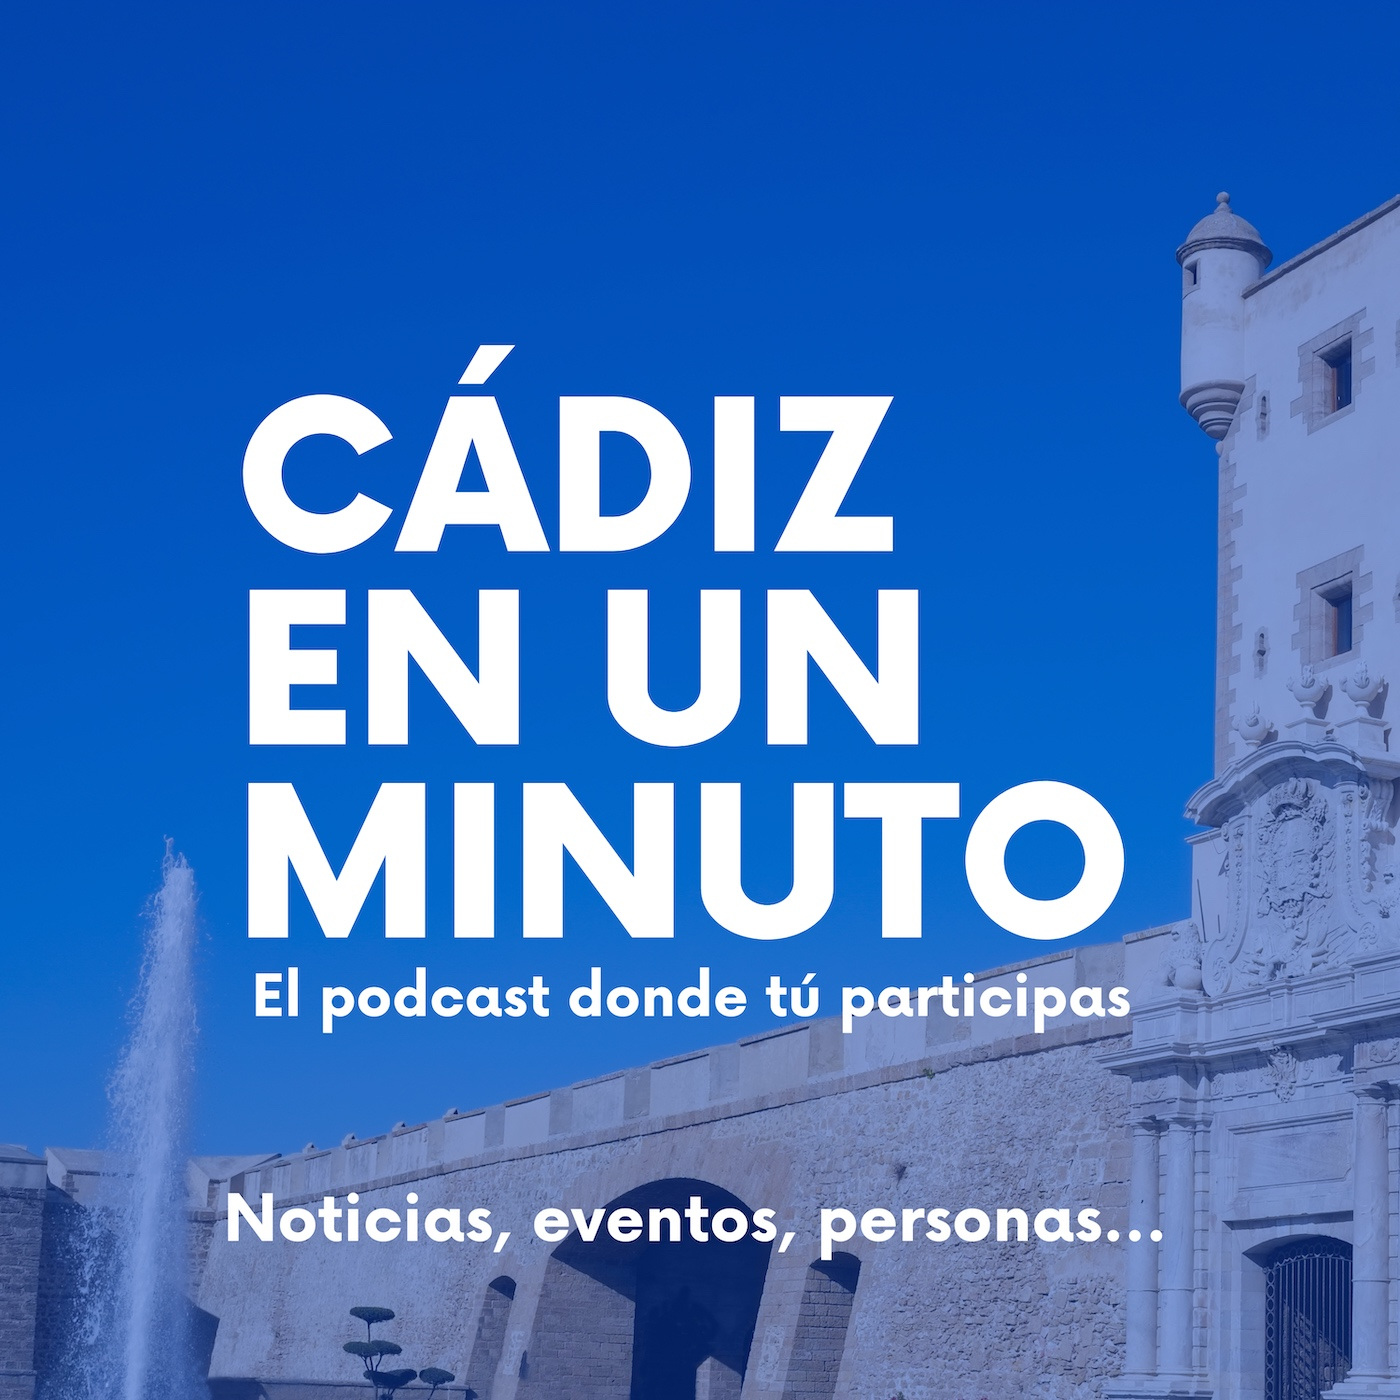 Plataforma de voluntariado de la provincia de Cádiz